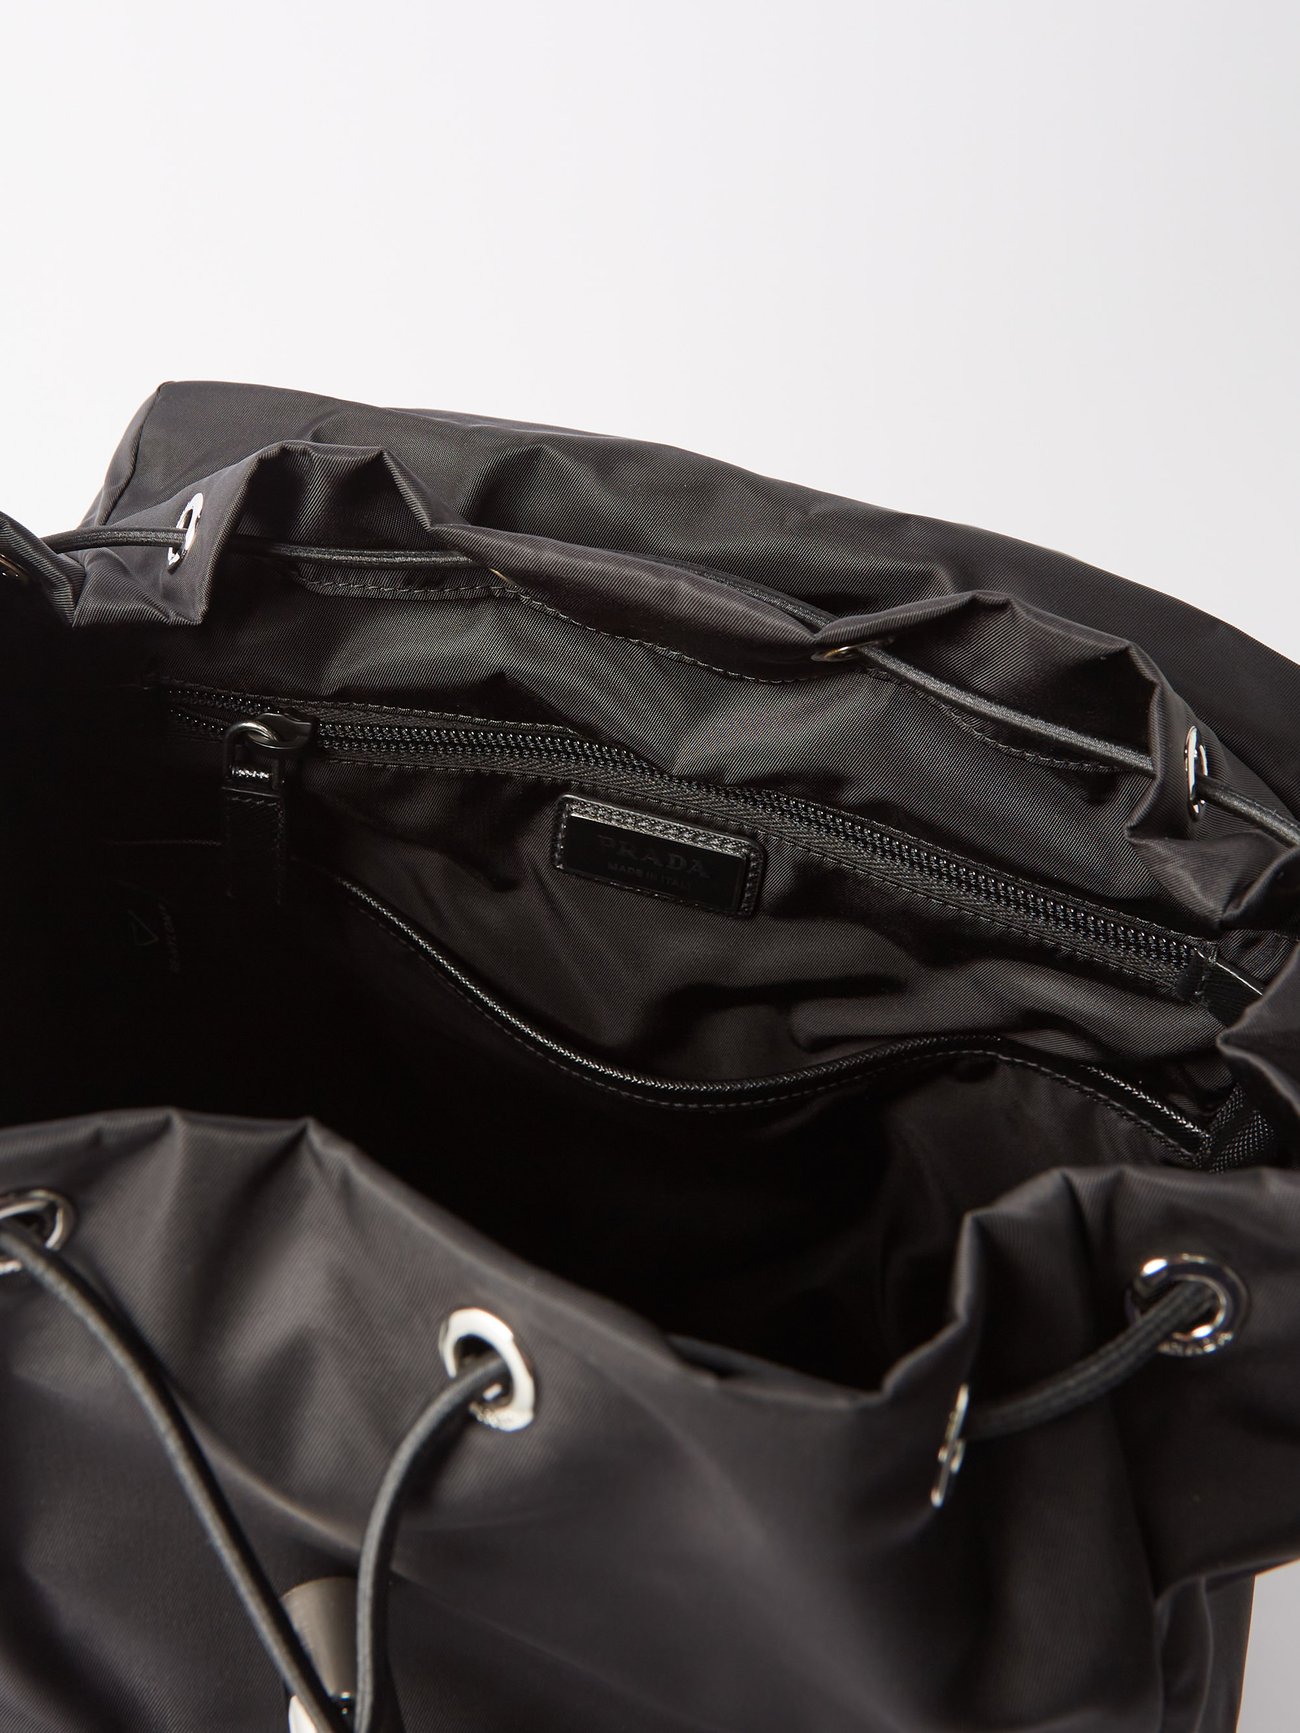 Black Saffiano leather-trimmed Re-Nylon backpack, Prada